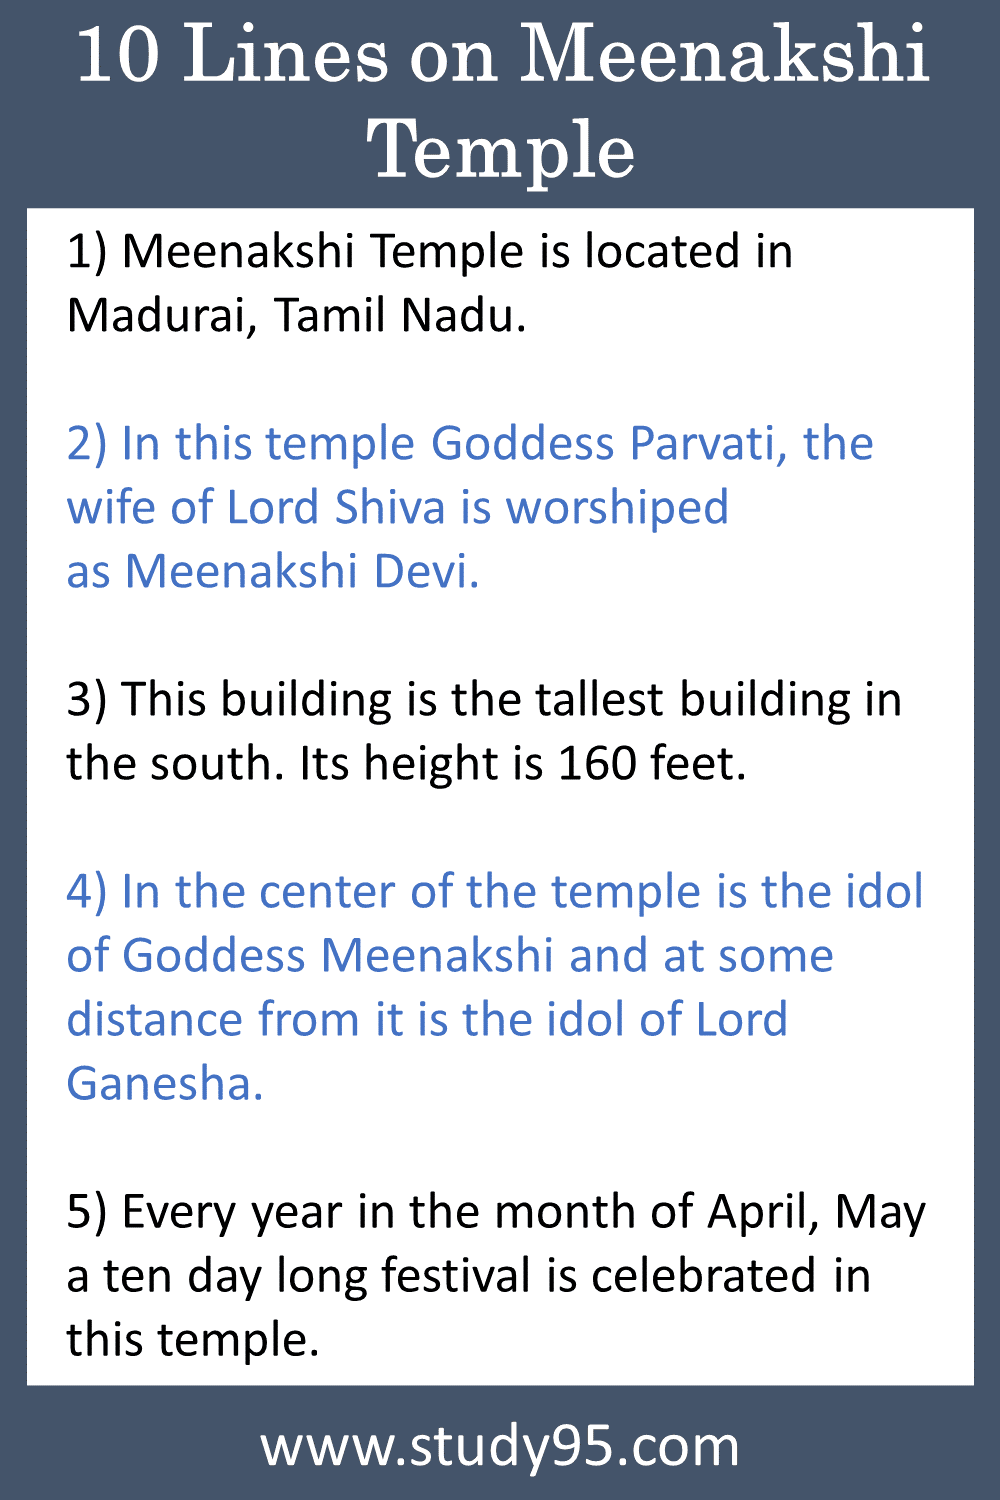 Lines on Meenakshi Temple